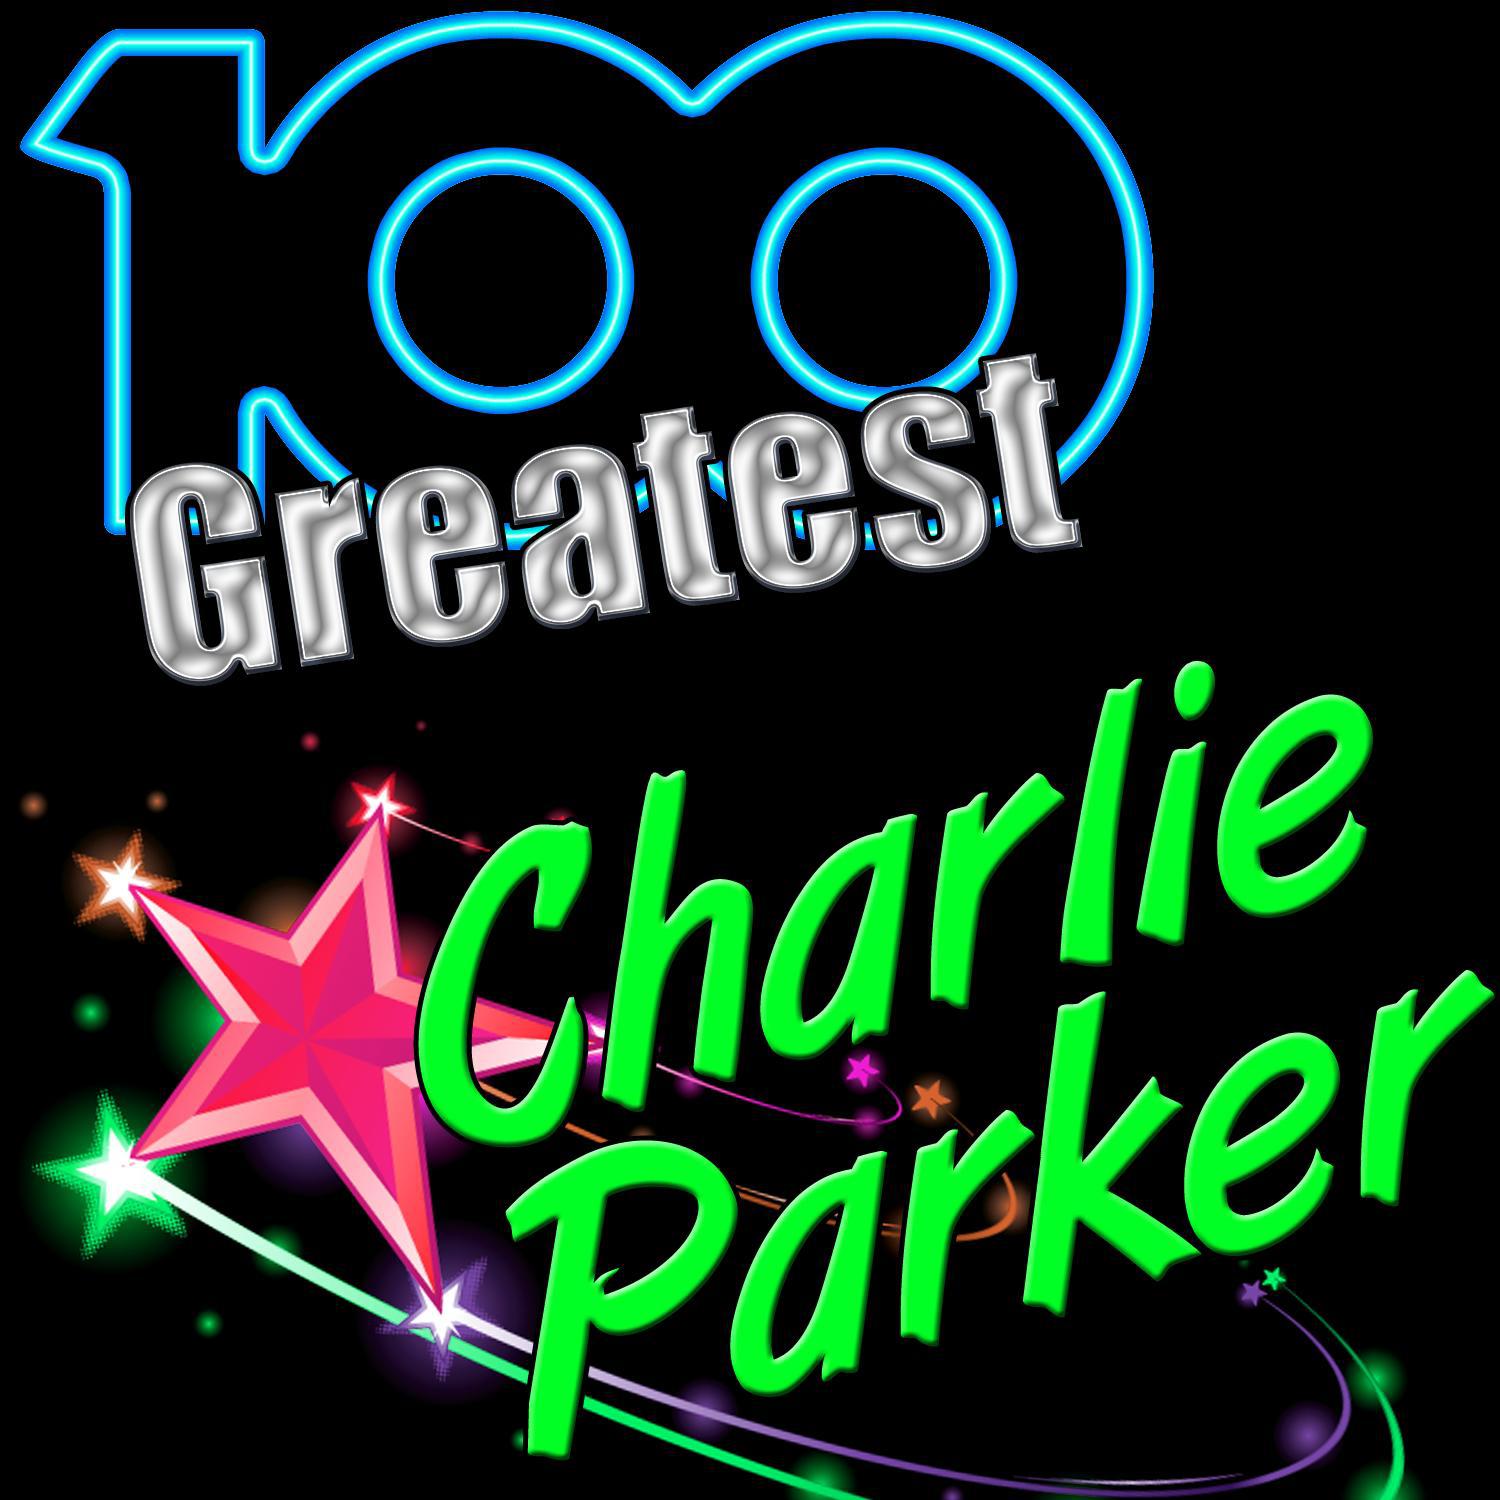 100 Greatest: Charlie Parker